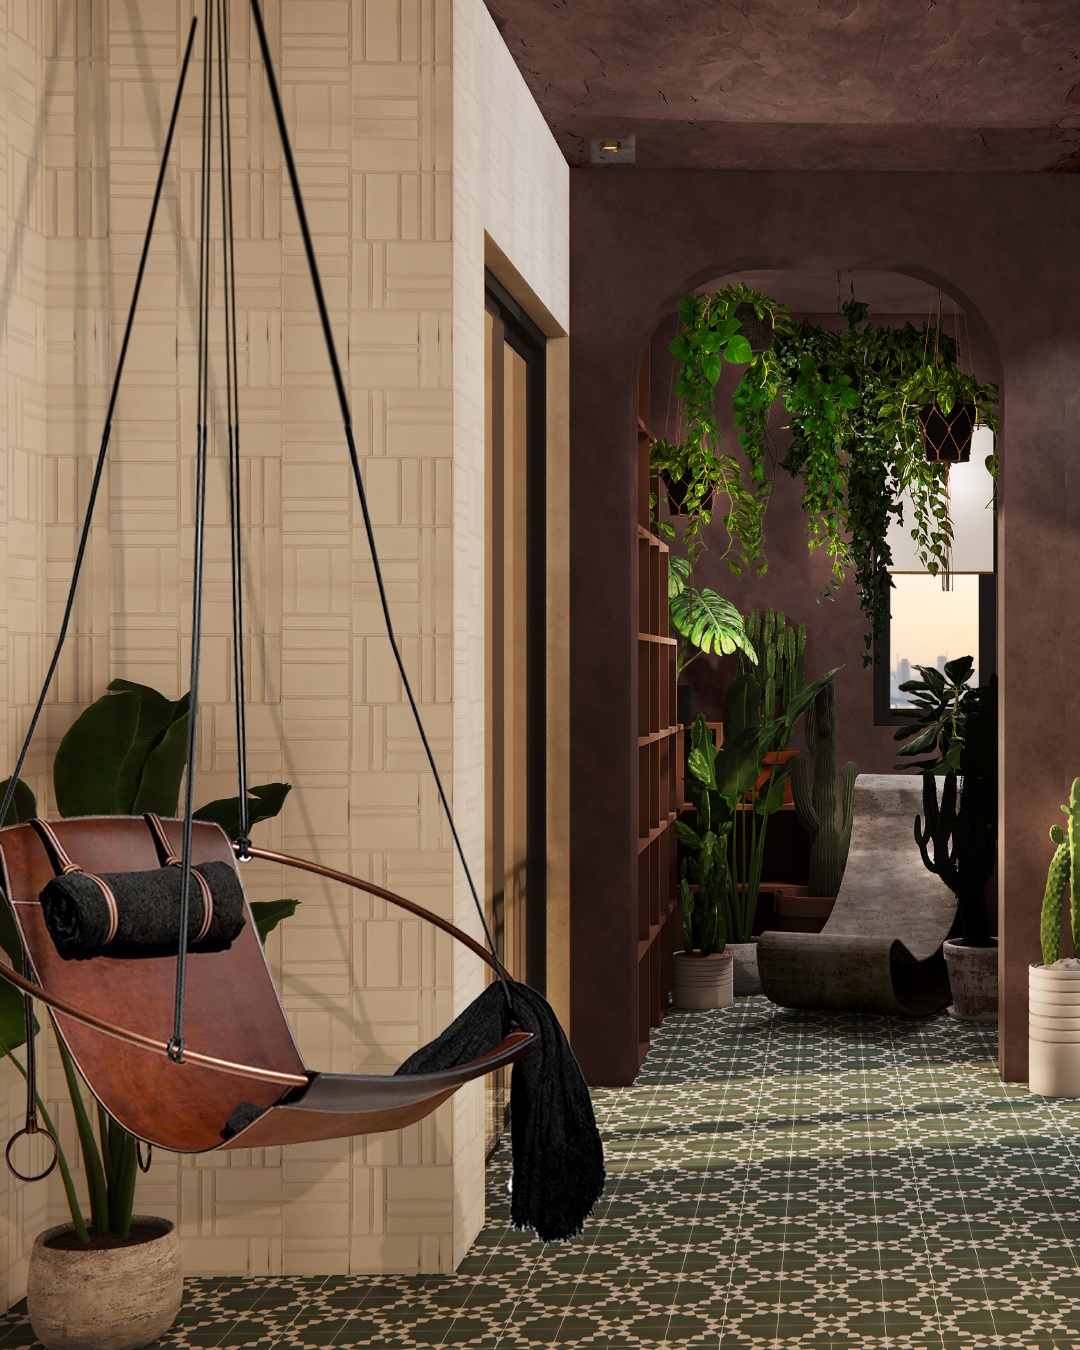 hanging chair in tiled corridor between spaces in a restaurant